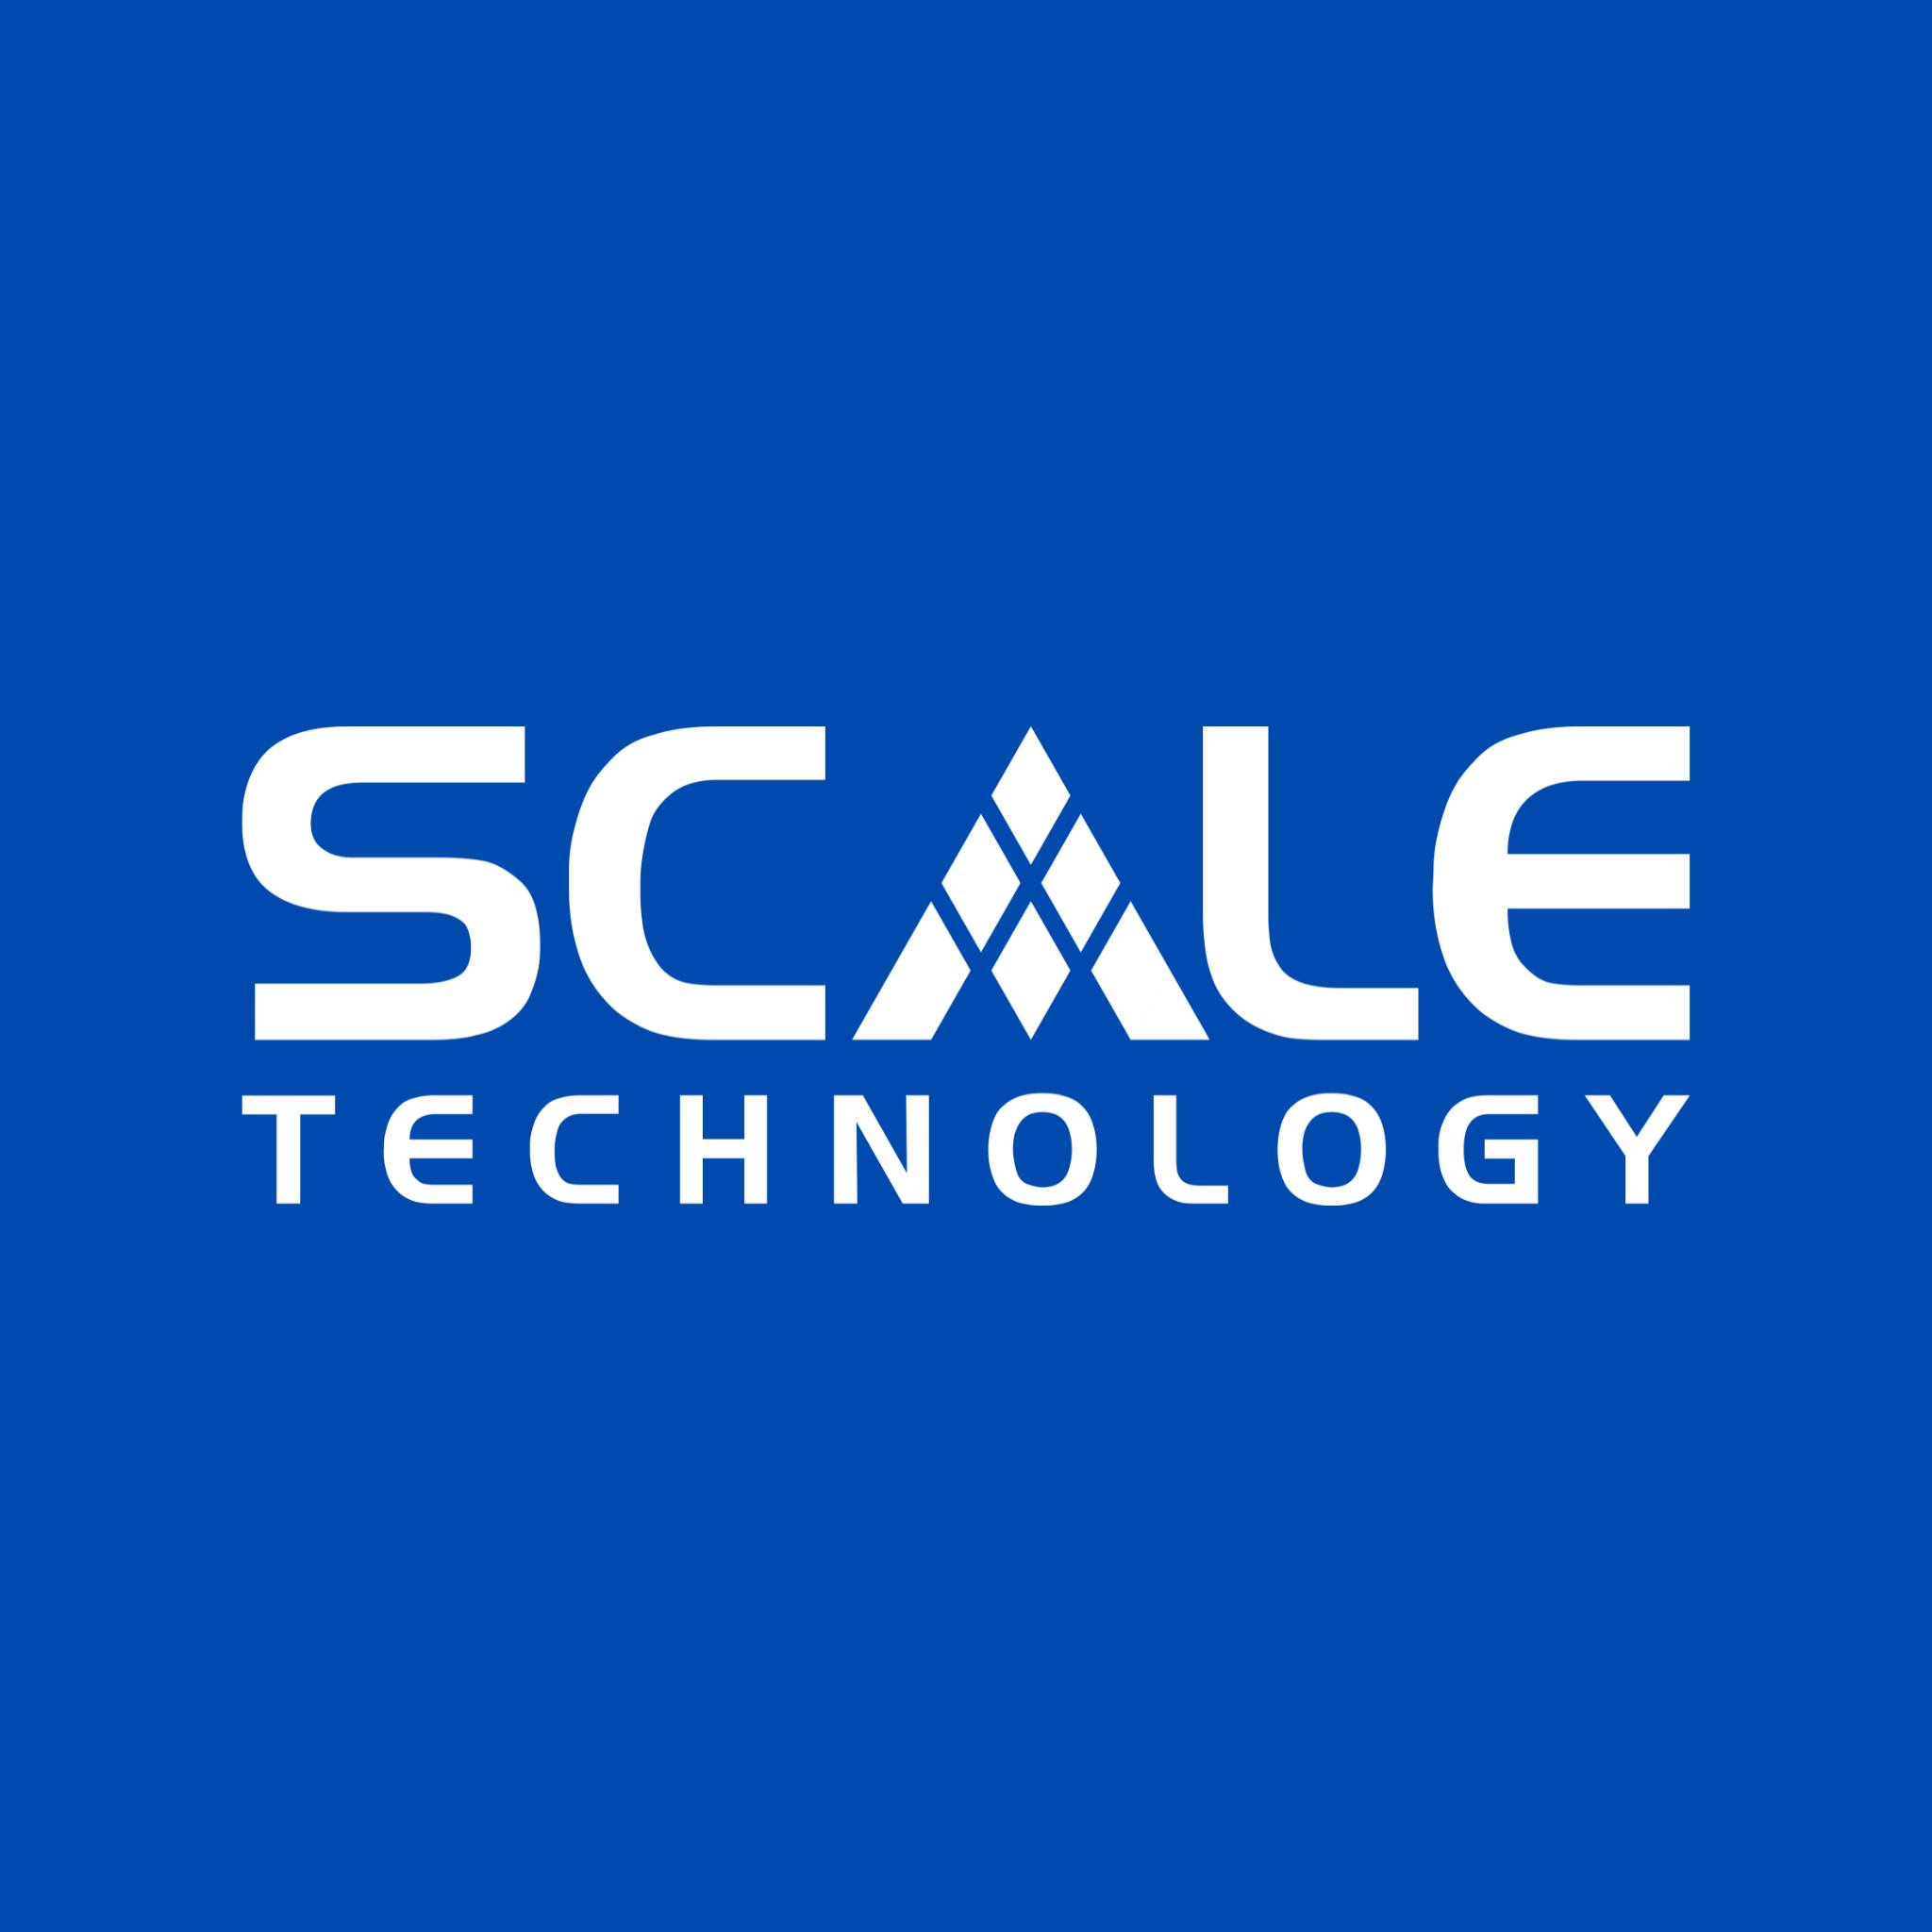 Scale Technology msp managed service provider